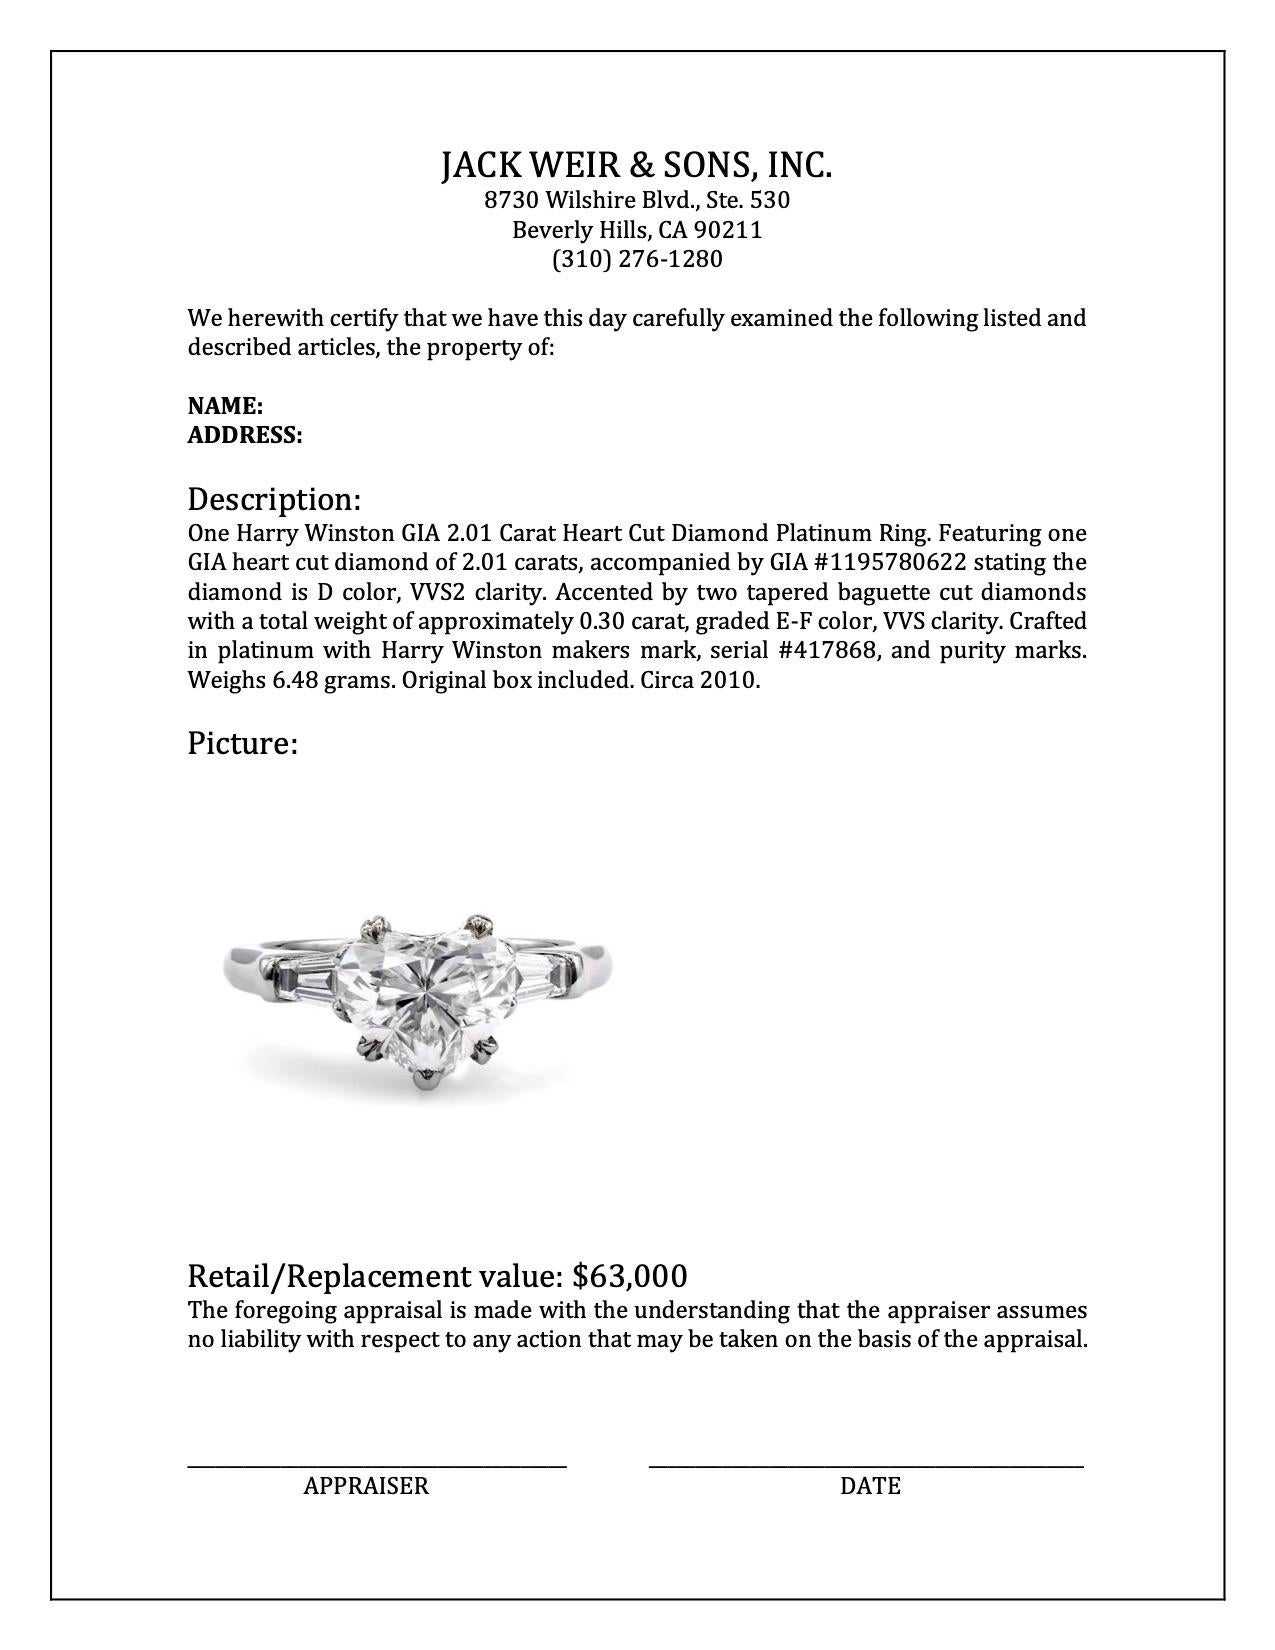 Harry Winston GIA 2.01 Carat Heart Cut Diamond Platinum Ring 4